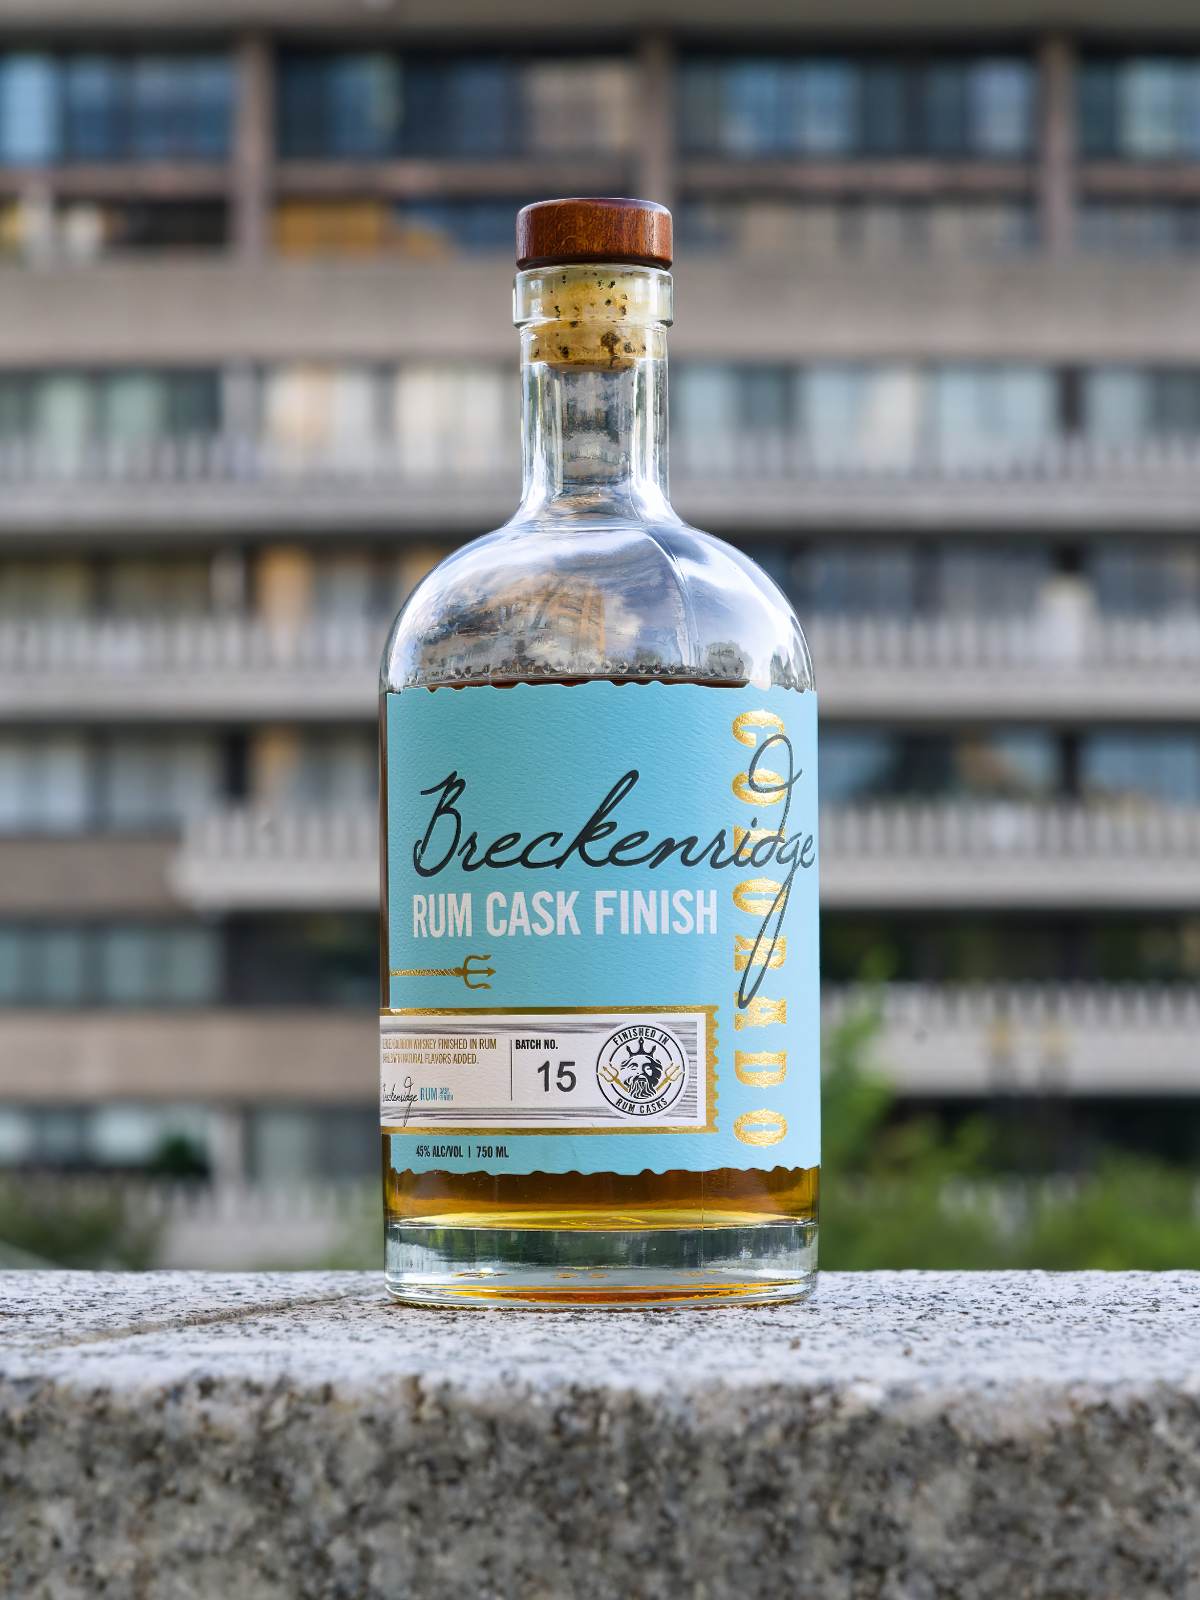 breckenridge rum cask finish featured